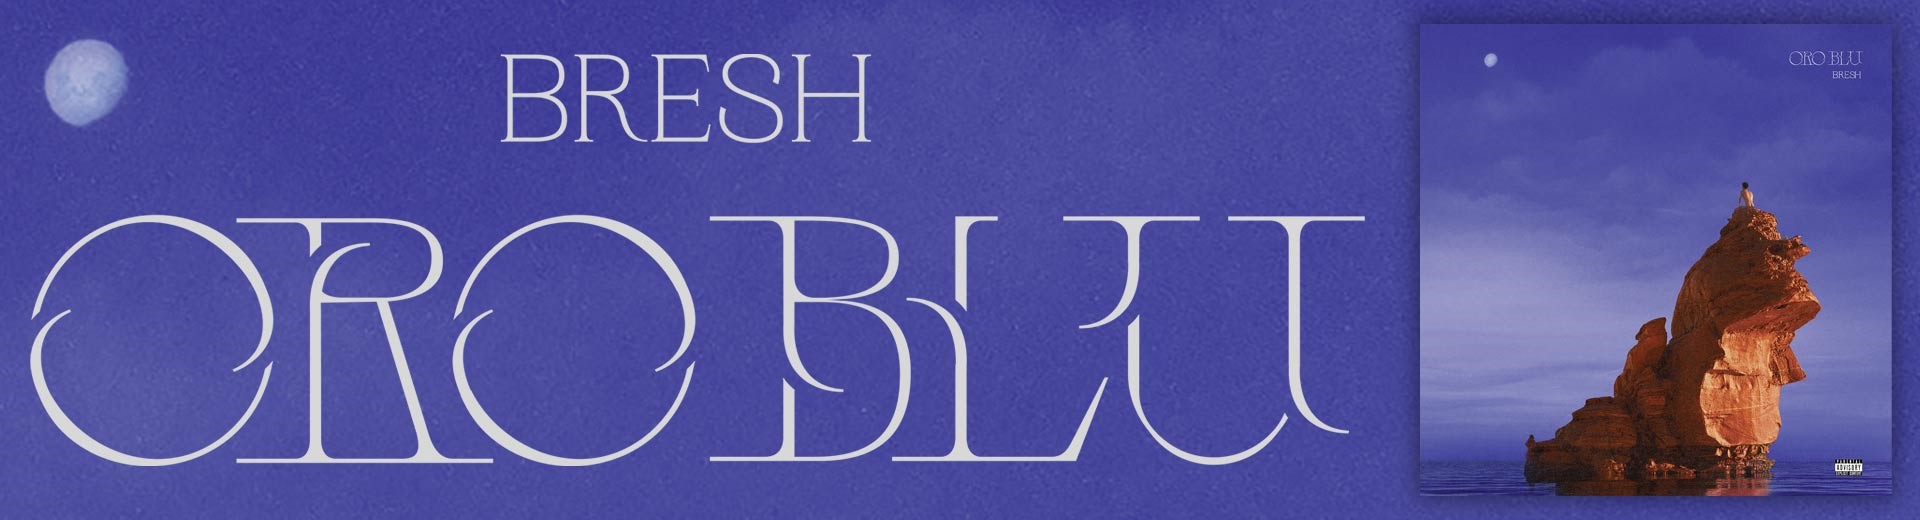 Bresh Oro Blu